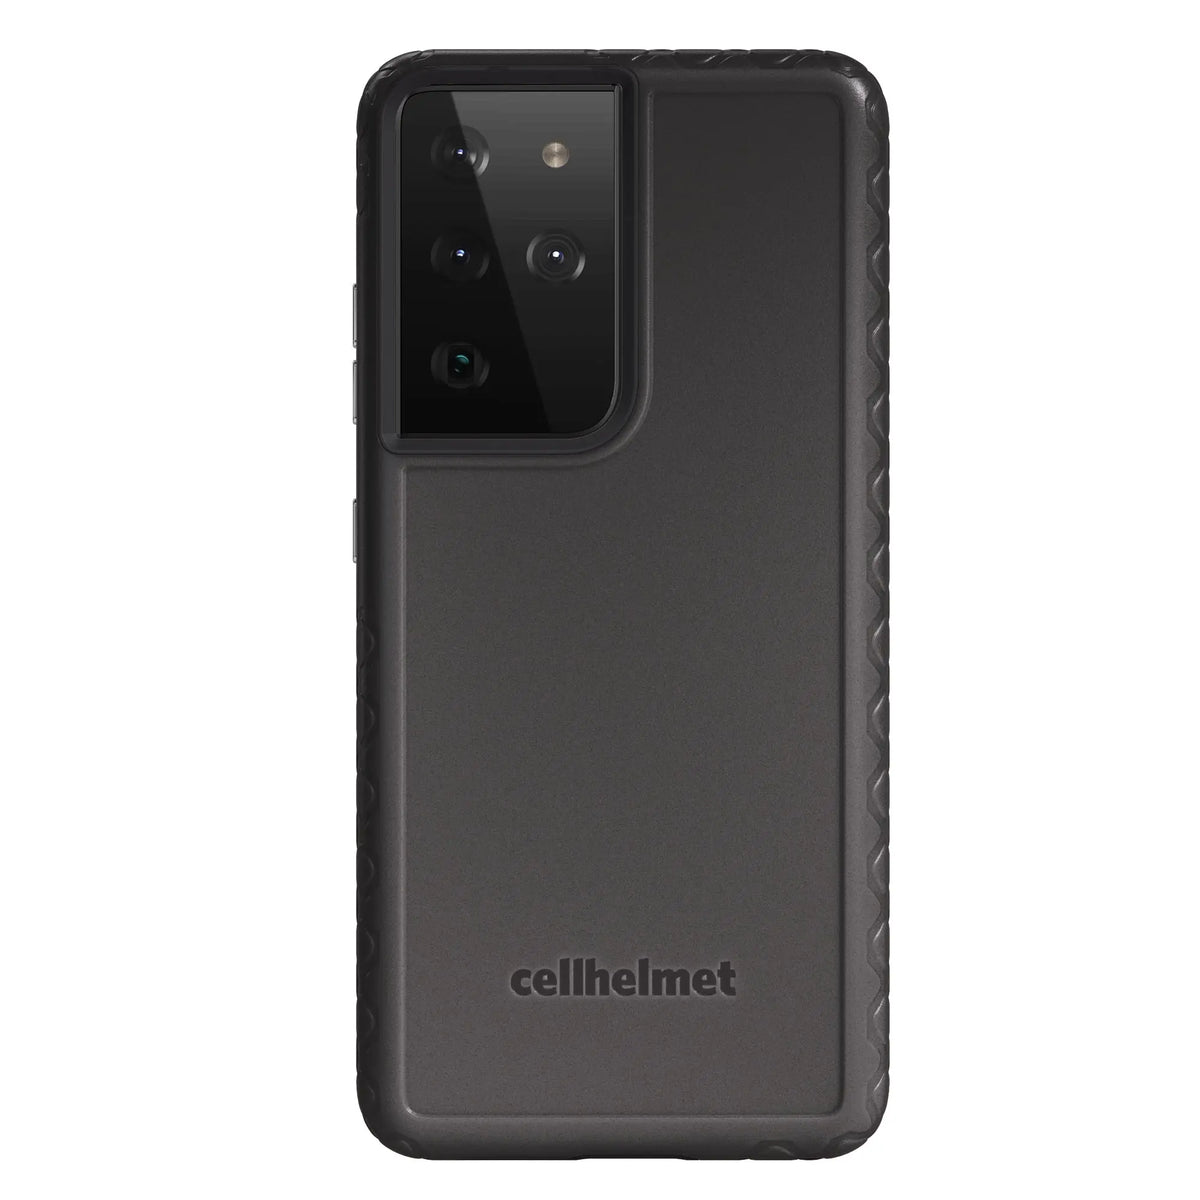 Black cellhelmet Customizable Case for Galaxy S21 Ultra